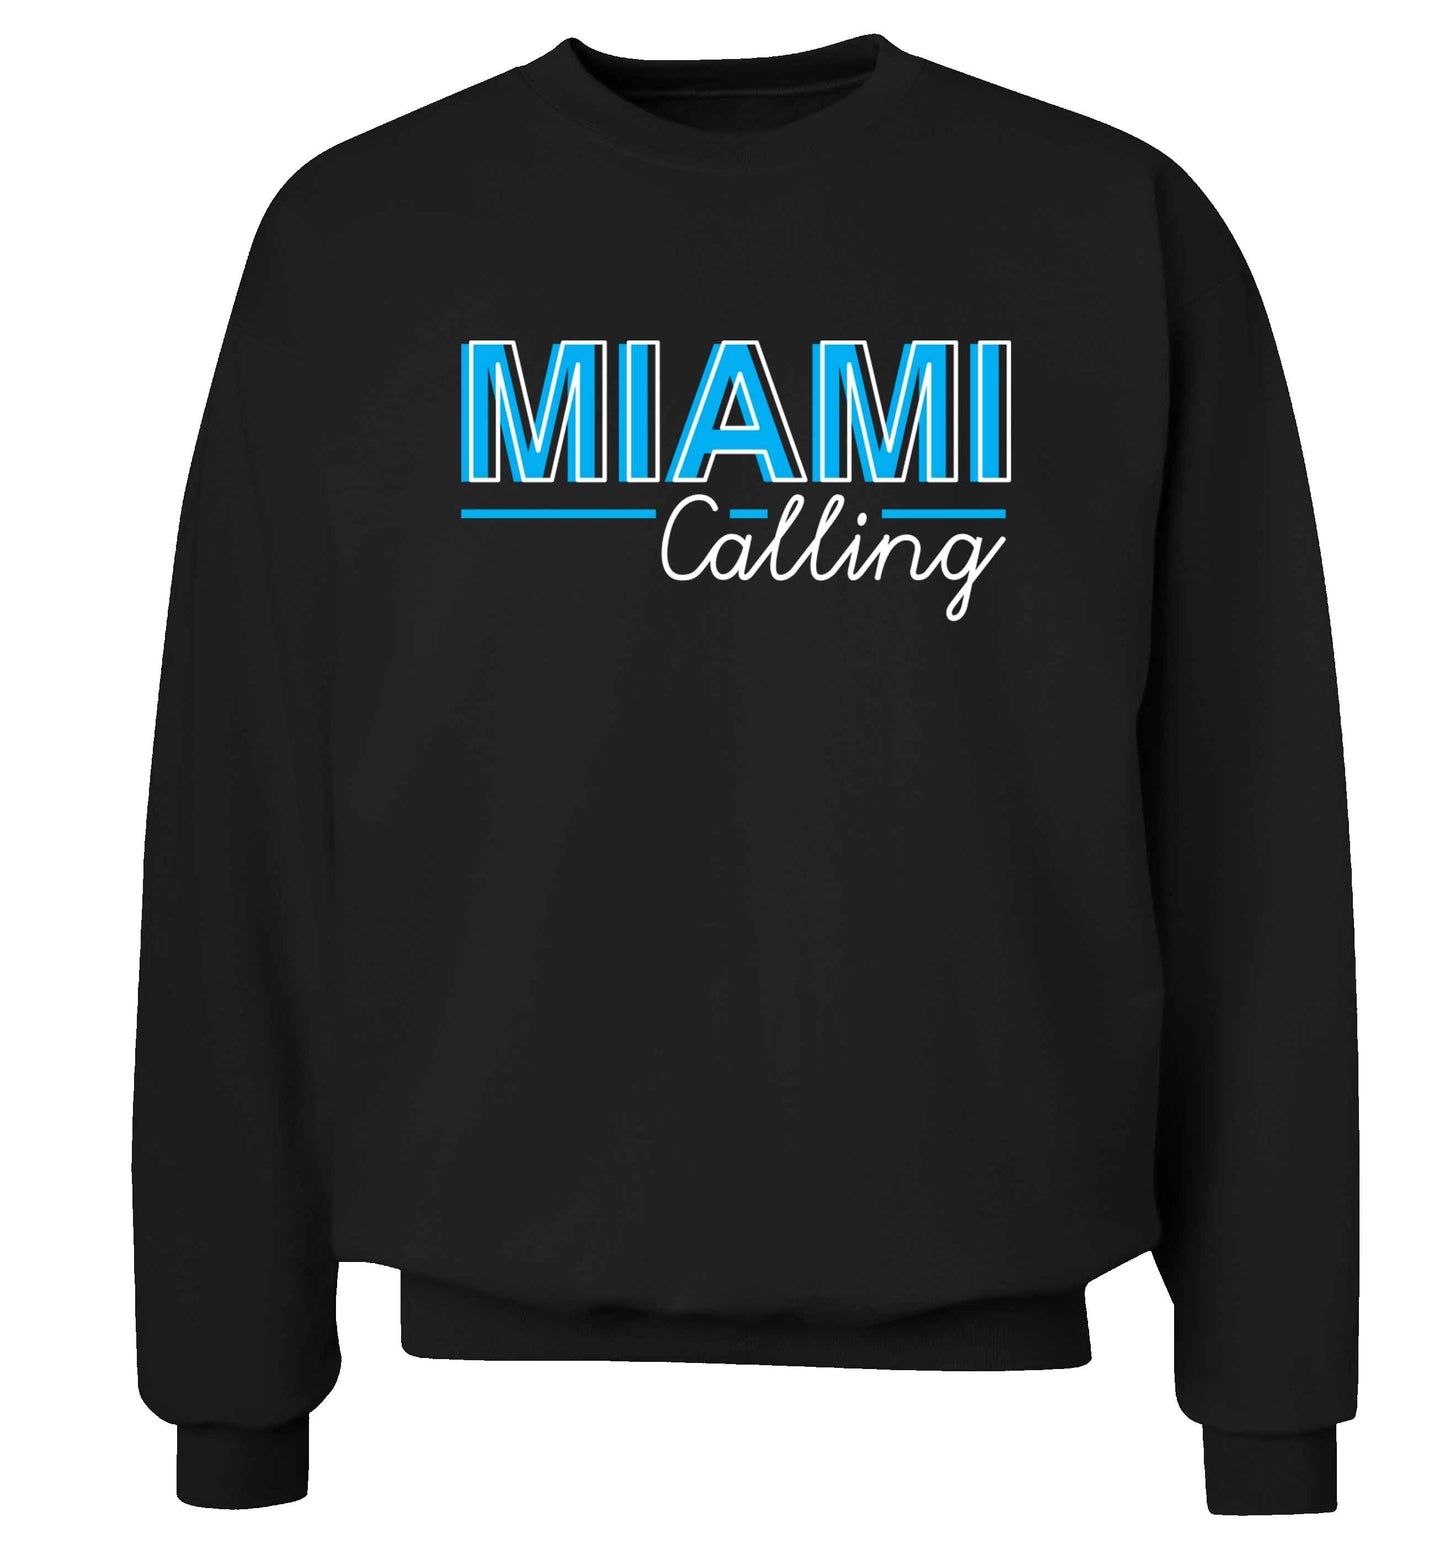 Miami calling Adult's unisex black Sweater 2XL